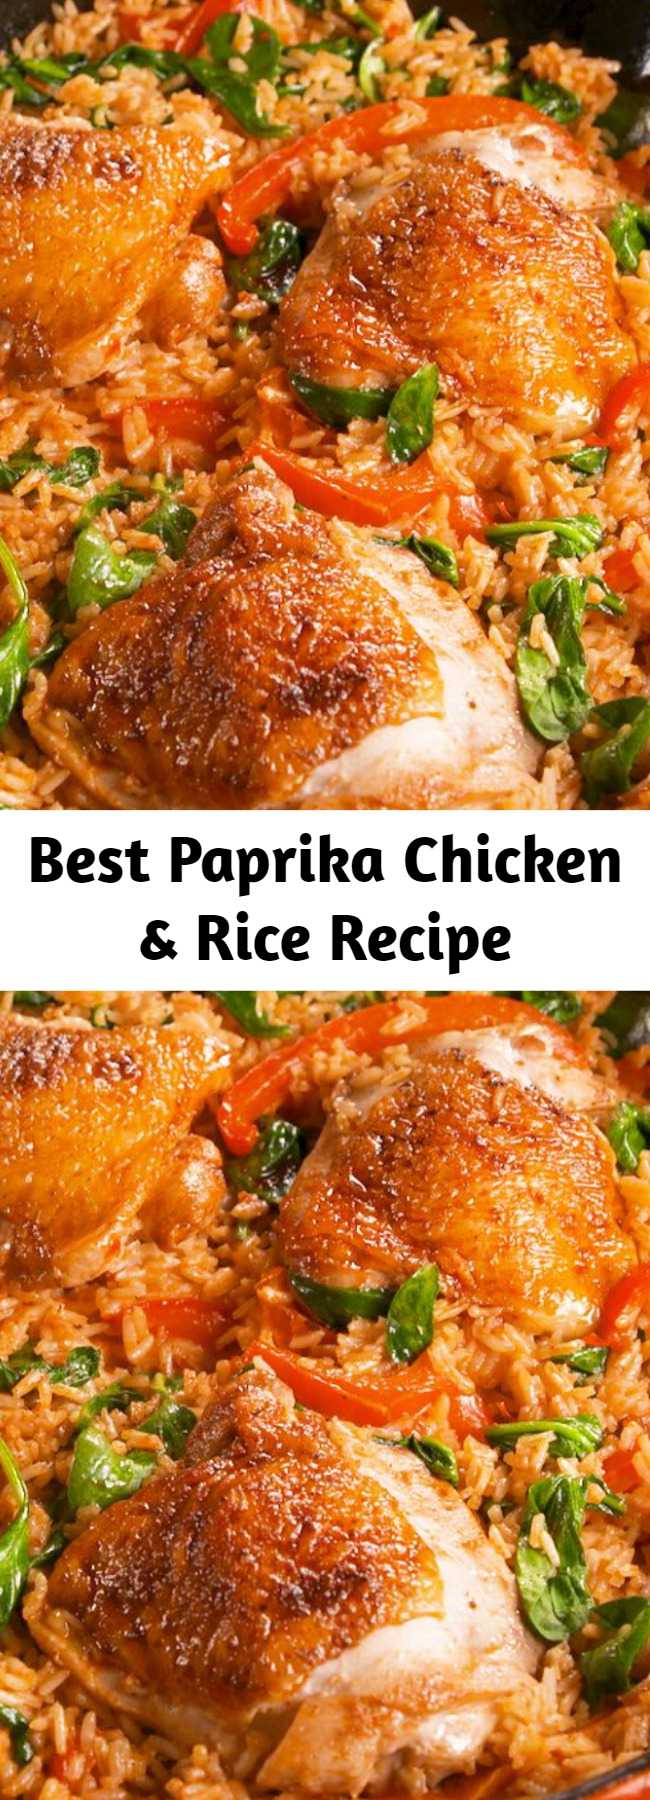 Best Paprika Chicken & Rice Recipe - Weeknight dinner all-star. #food #easyrecipe #dinner #familydinner #chicken